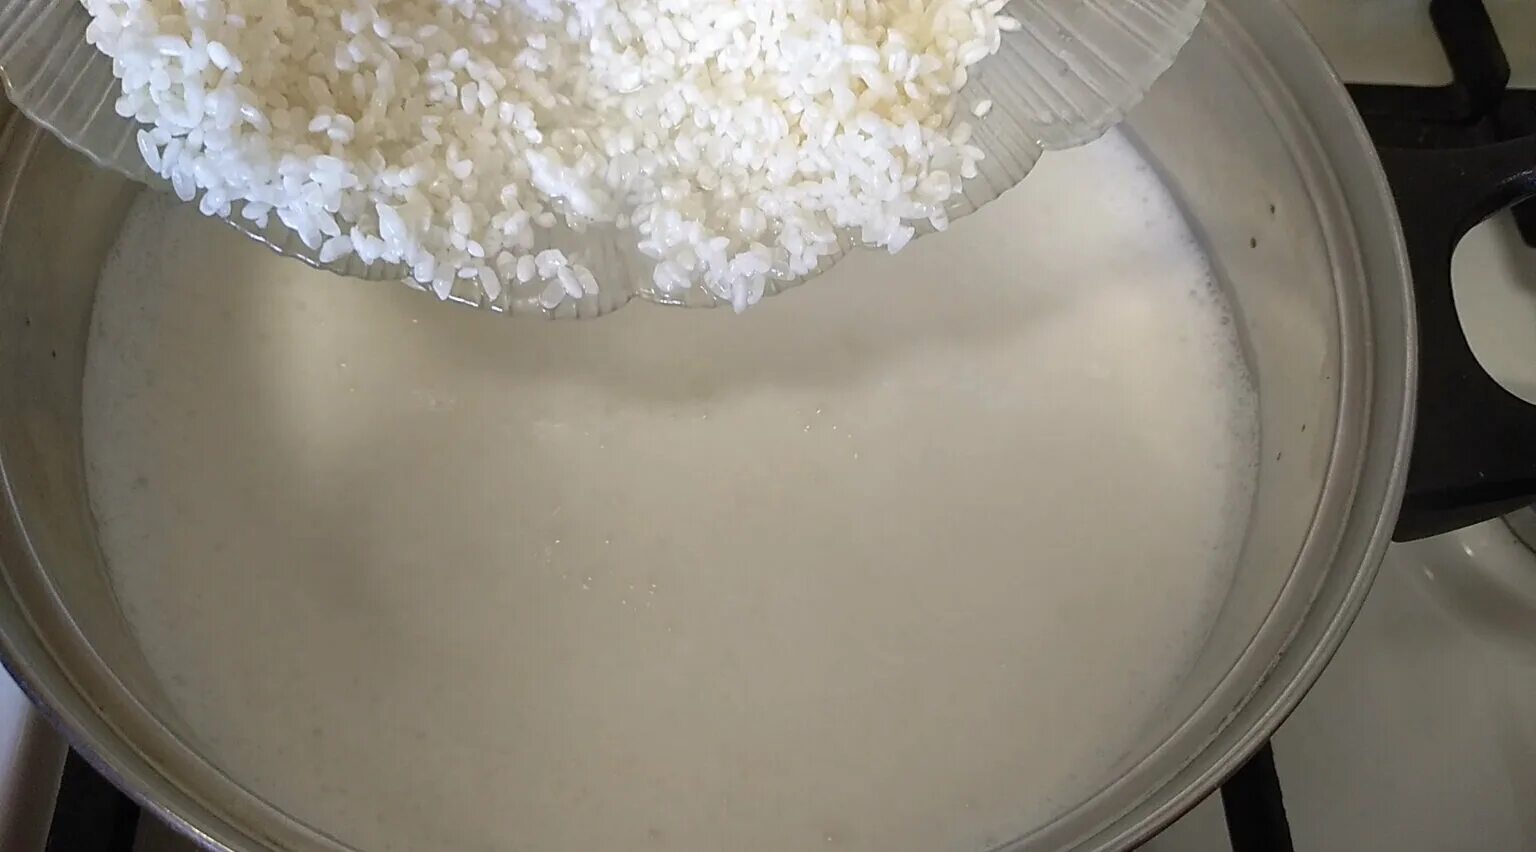 Рис на молоке. Приготовление молочного риса. Пропорции молока и риса для рисовой каши в кастрюле на молоке. Рисовая каша на молоке в кастрюле.